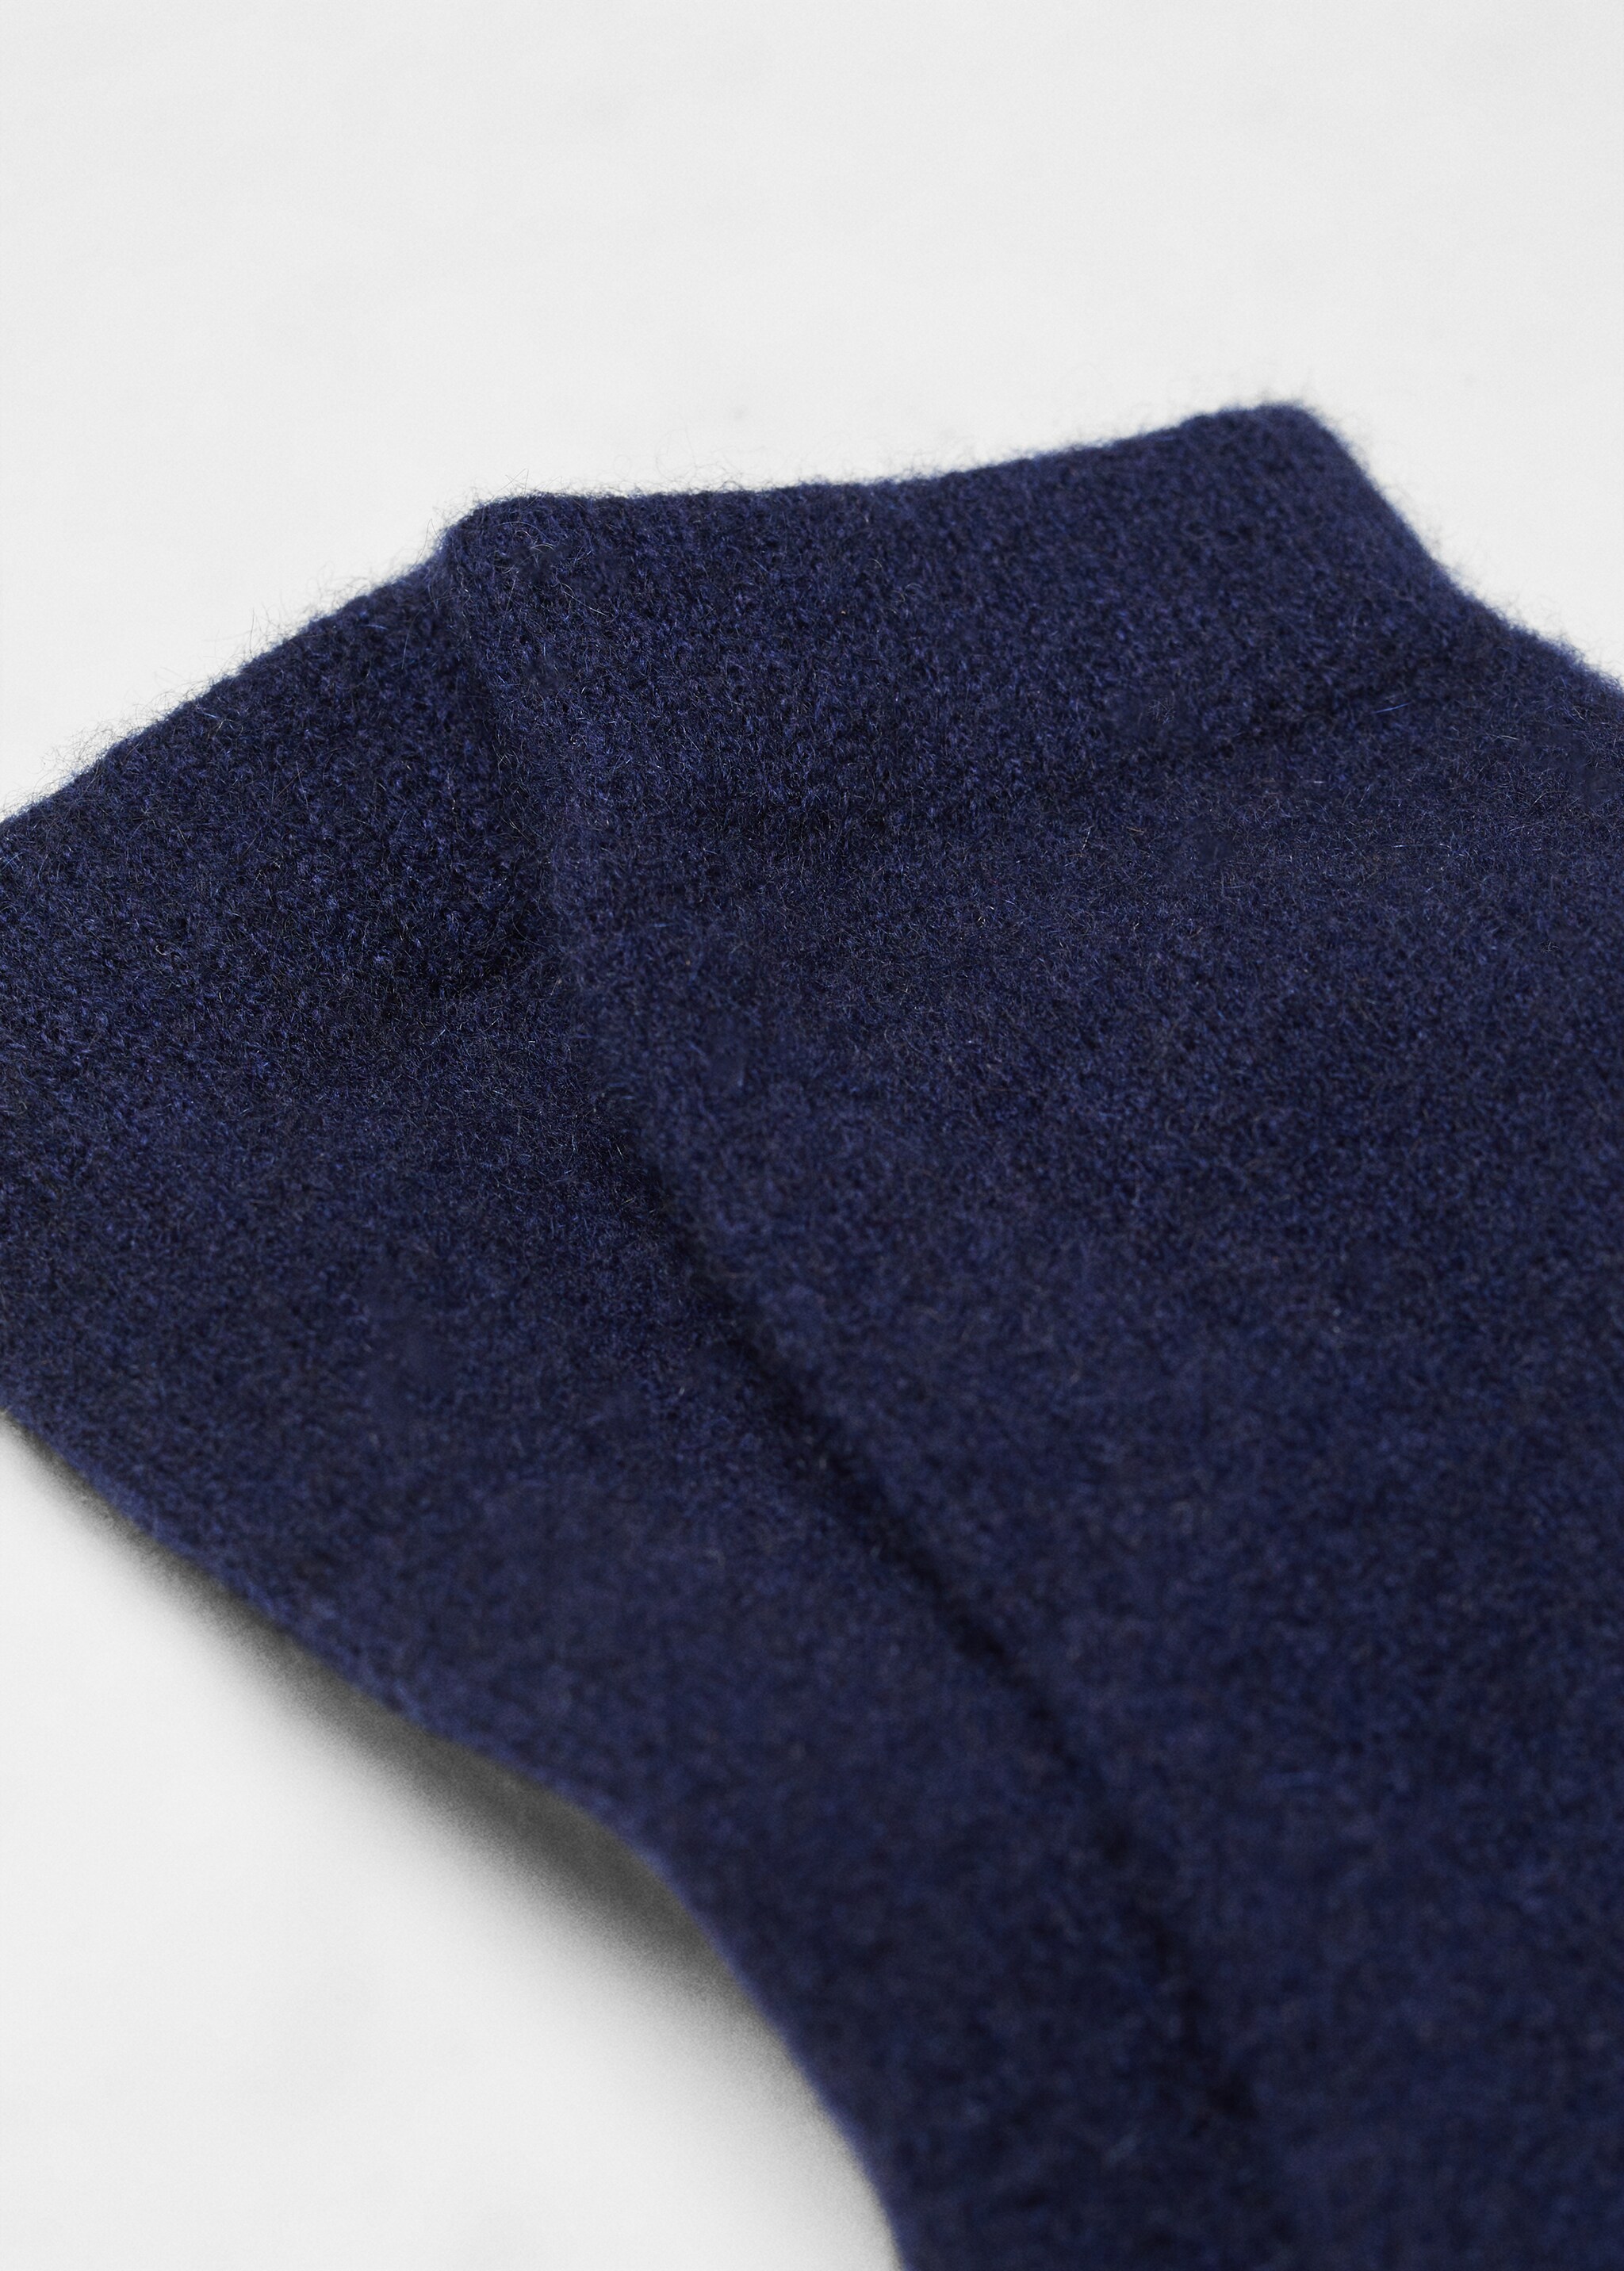 Cashmere knitted socks - Medium plane